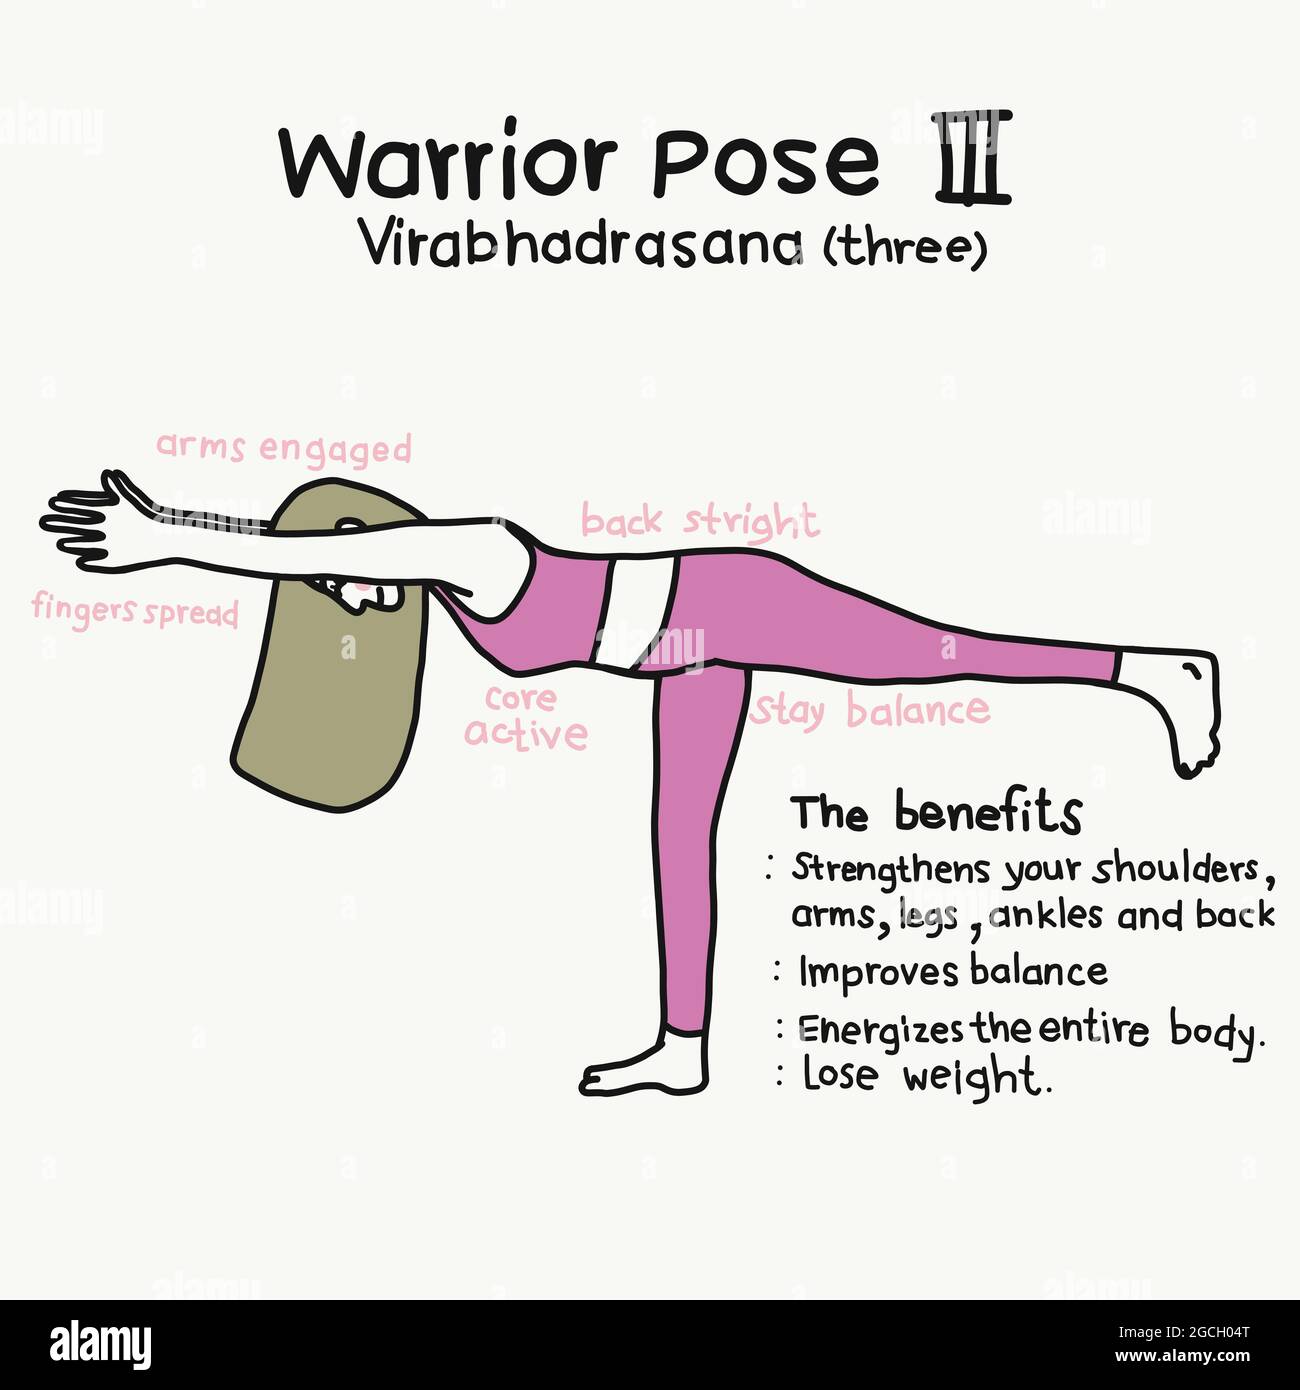 Wellness Warrior: A veteran using yoga to heal | 